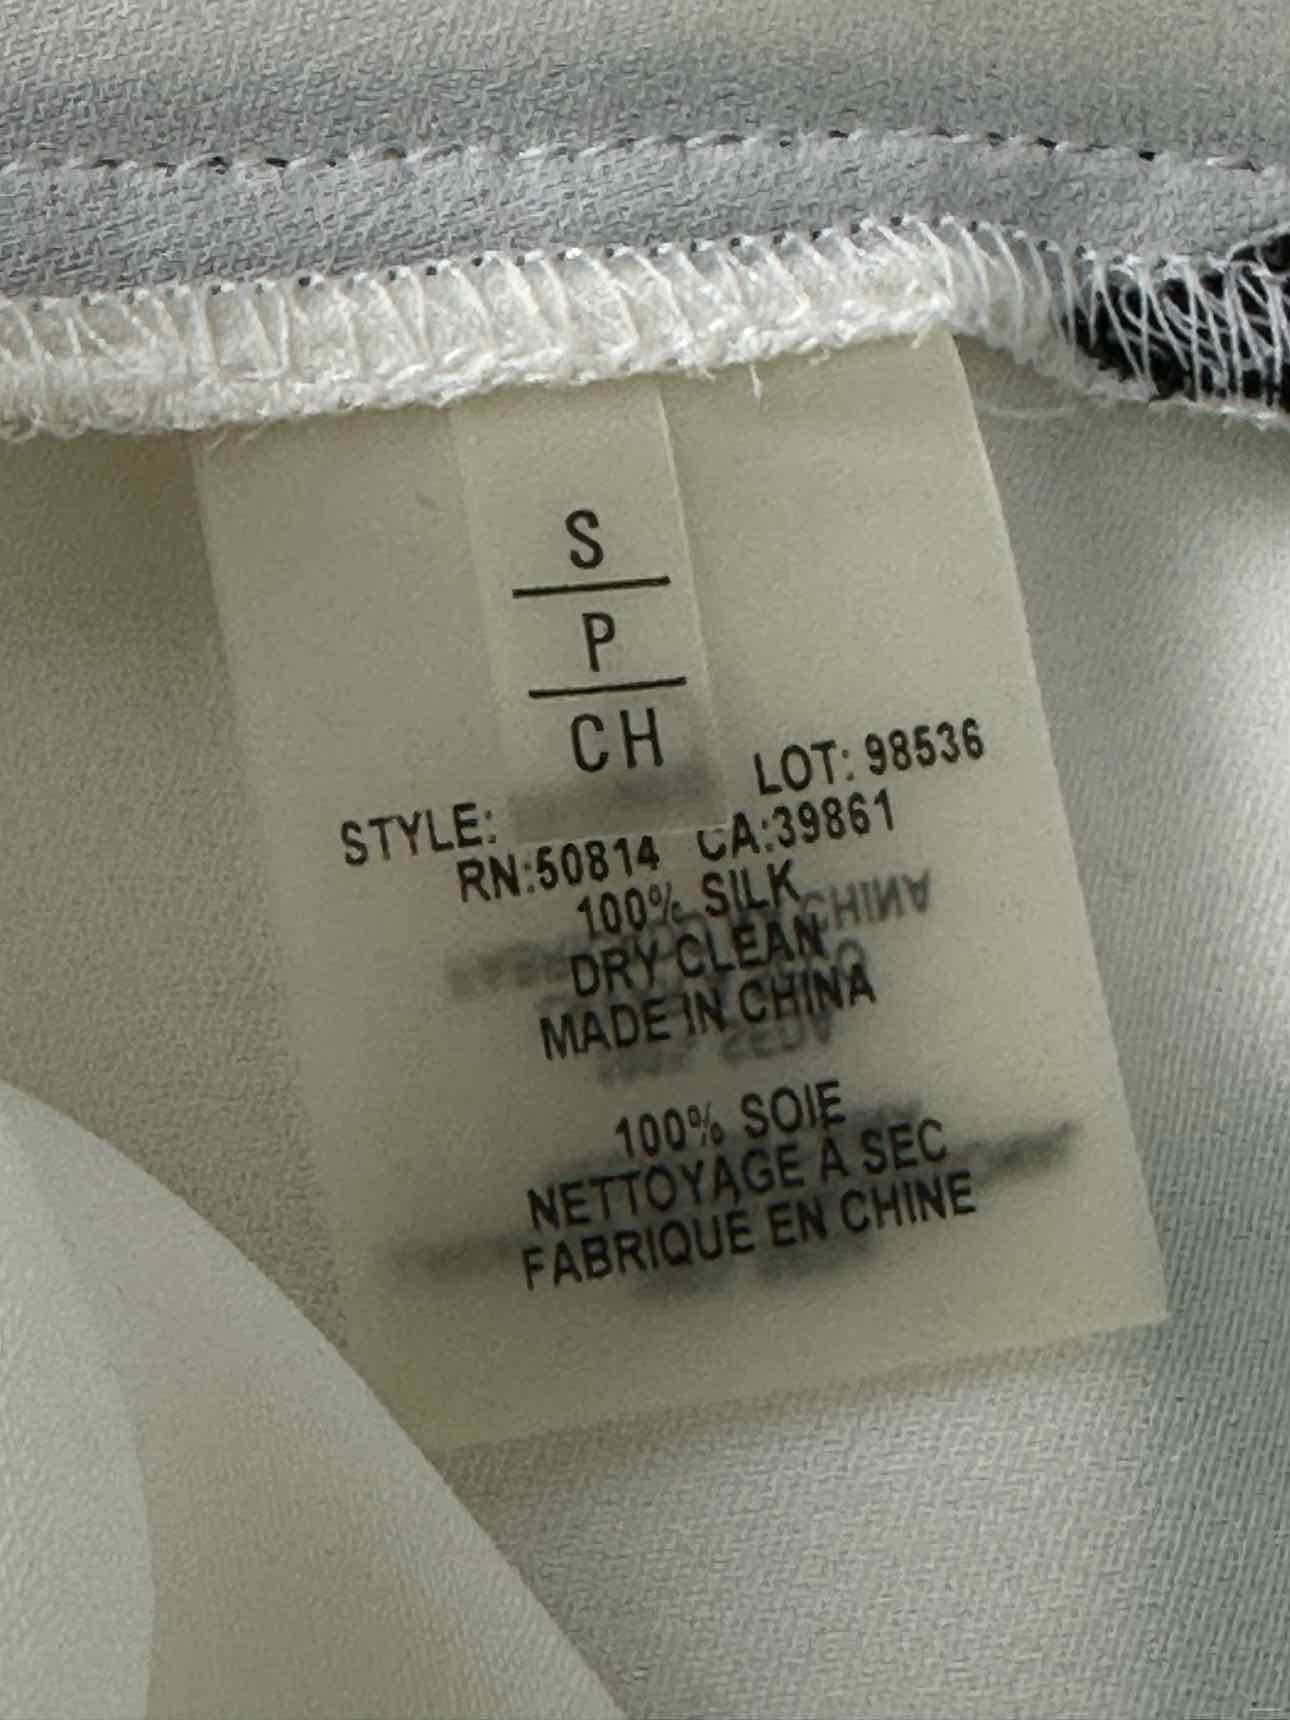 ELIE TAHARI Cream 100% Silk Button Down, fabric content tag